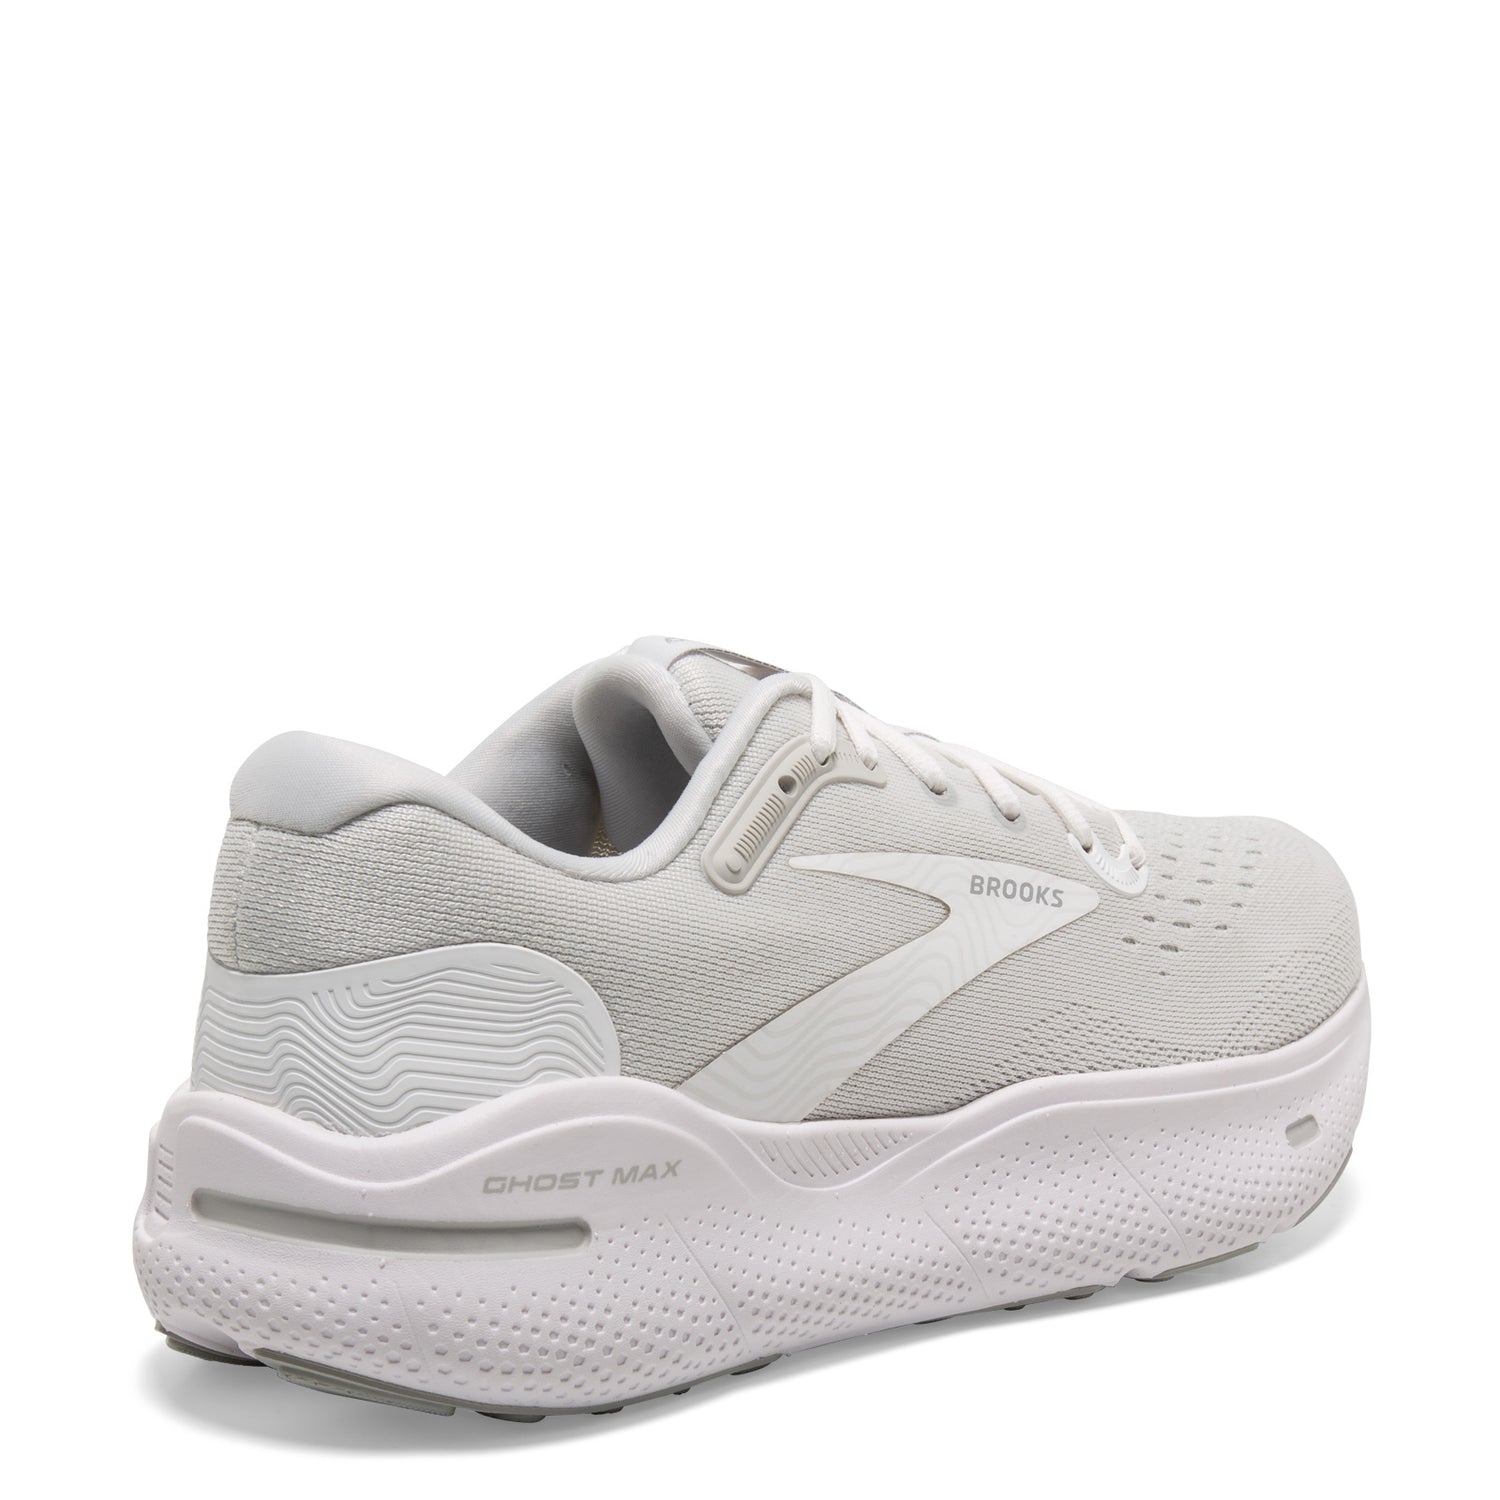 Peltz Shoes  Women's Brooks Ghost Max Running Shoe - Wide Width White/Oyster/Metallic Silver 120395 1D 124